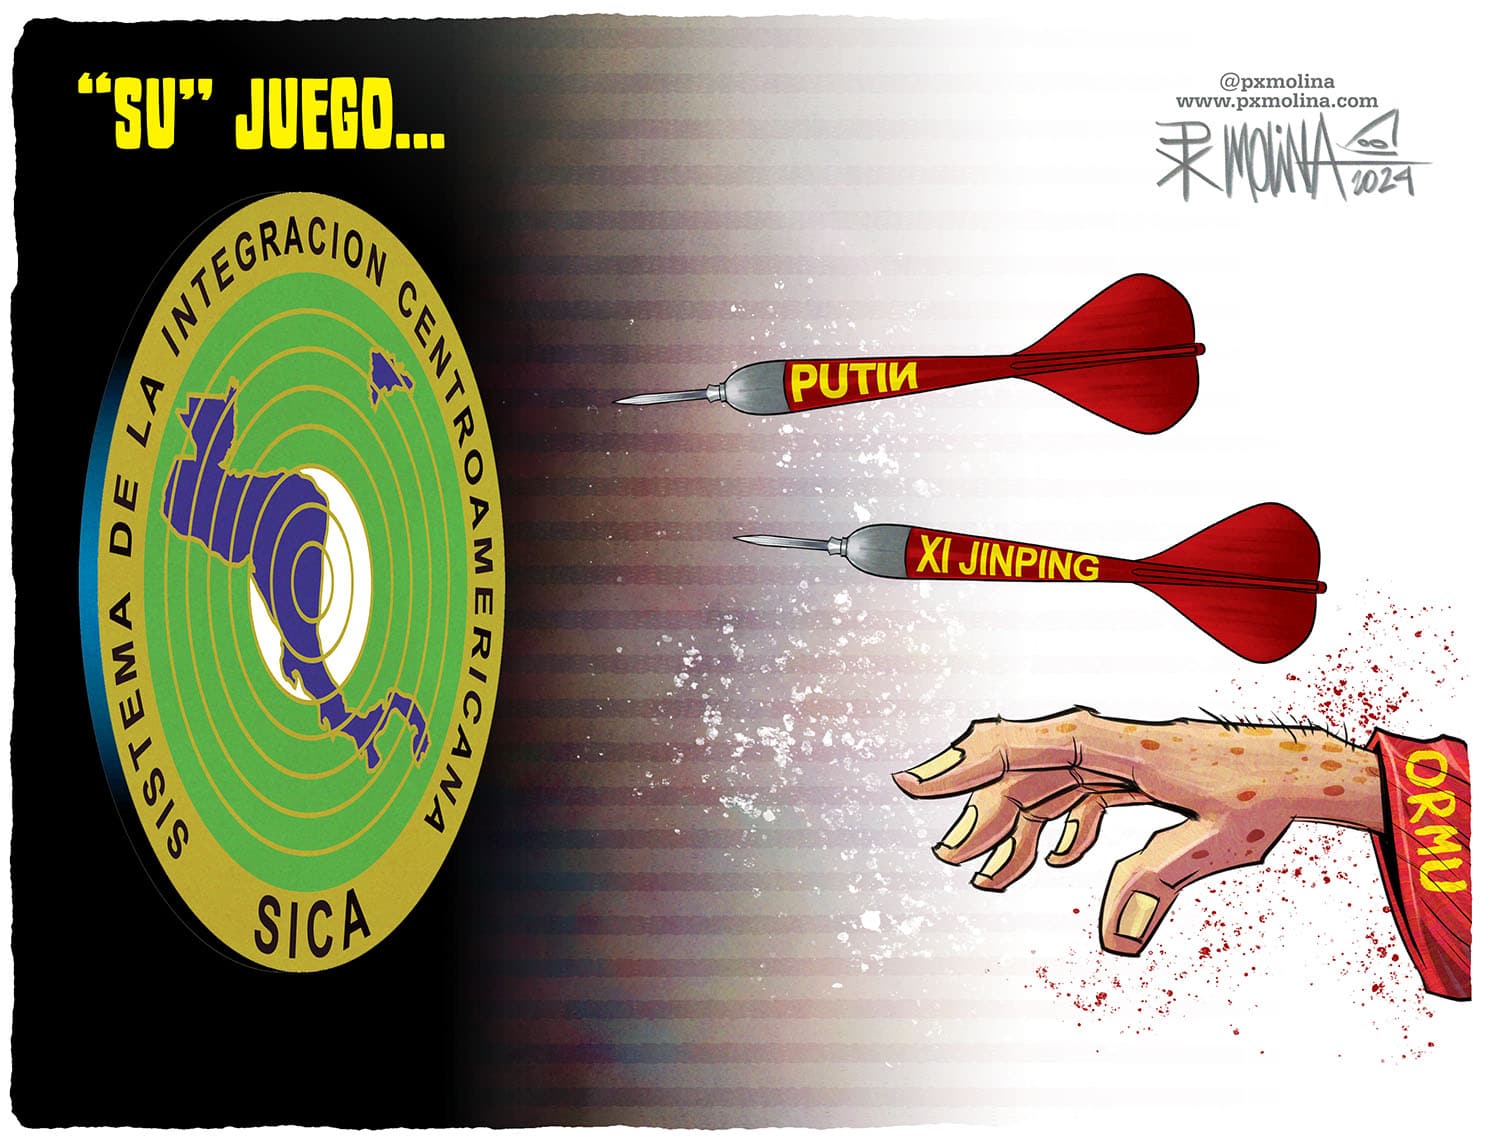 Daniel Ortega juego SICA